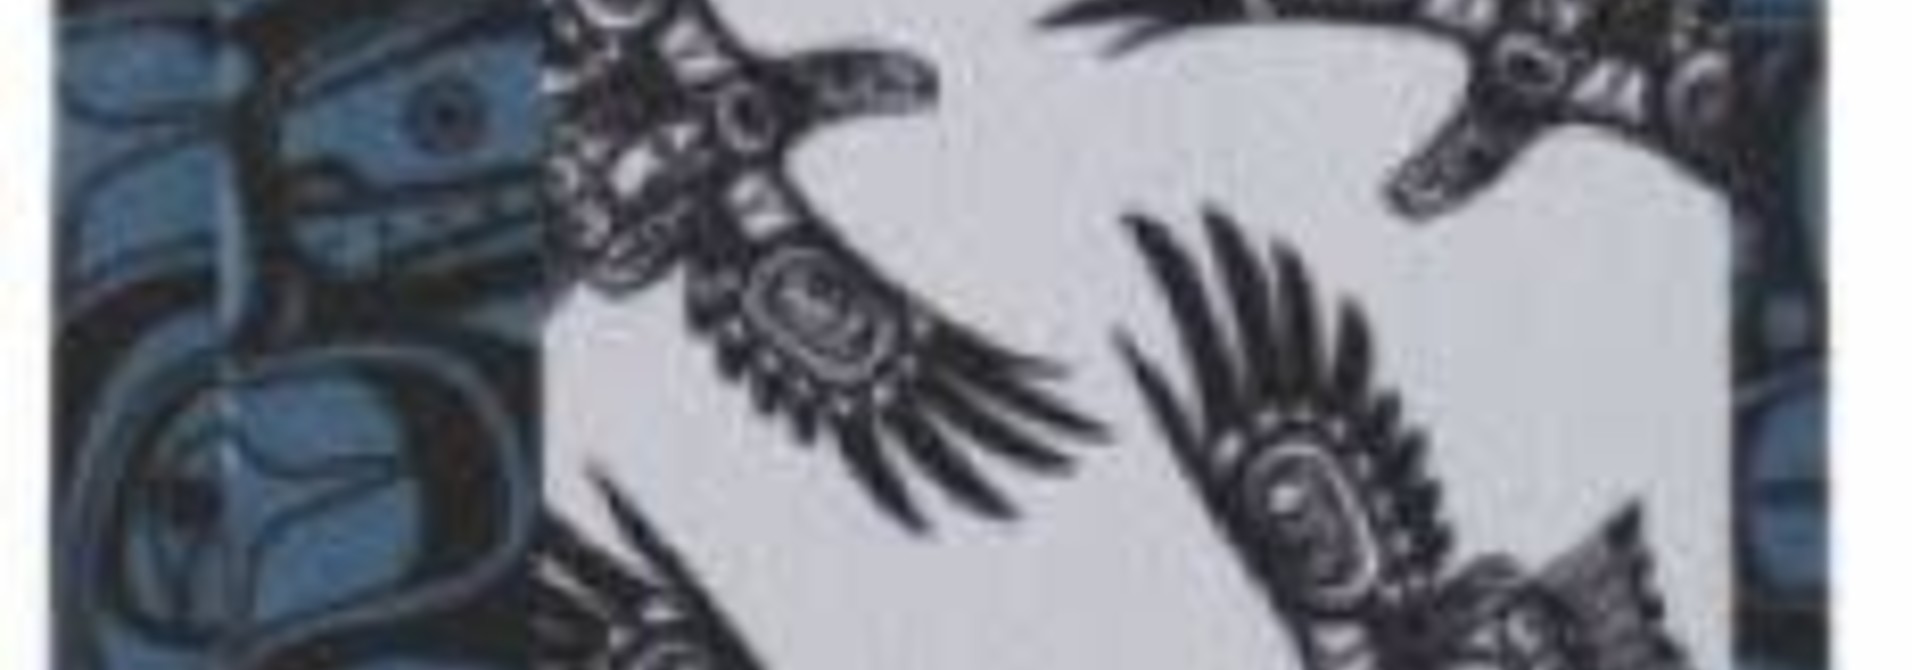 Blanket Coasters set of 2 - Soaring Eagle by Corey Bulpitt